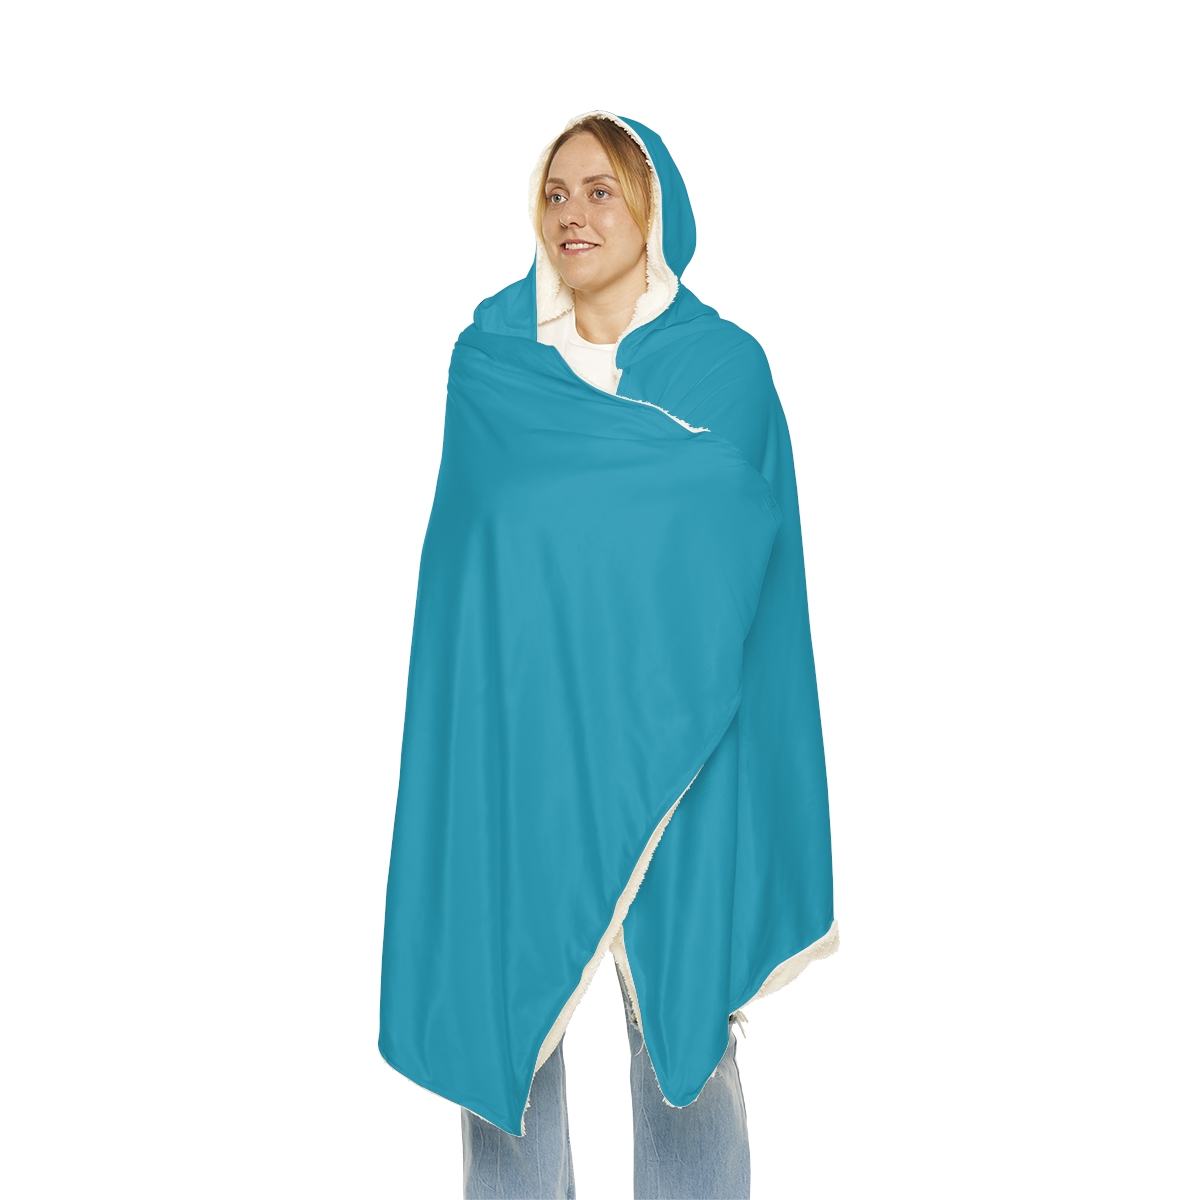 Snuggle Blanket product thumbnail image